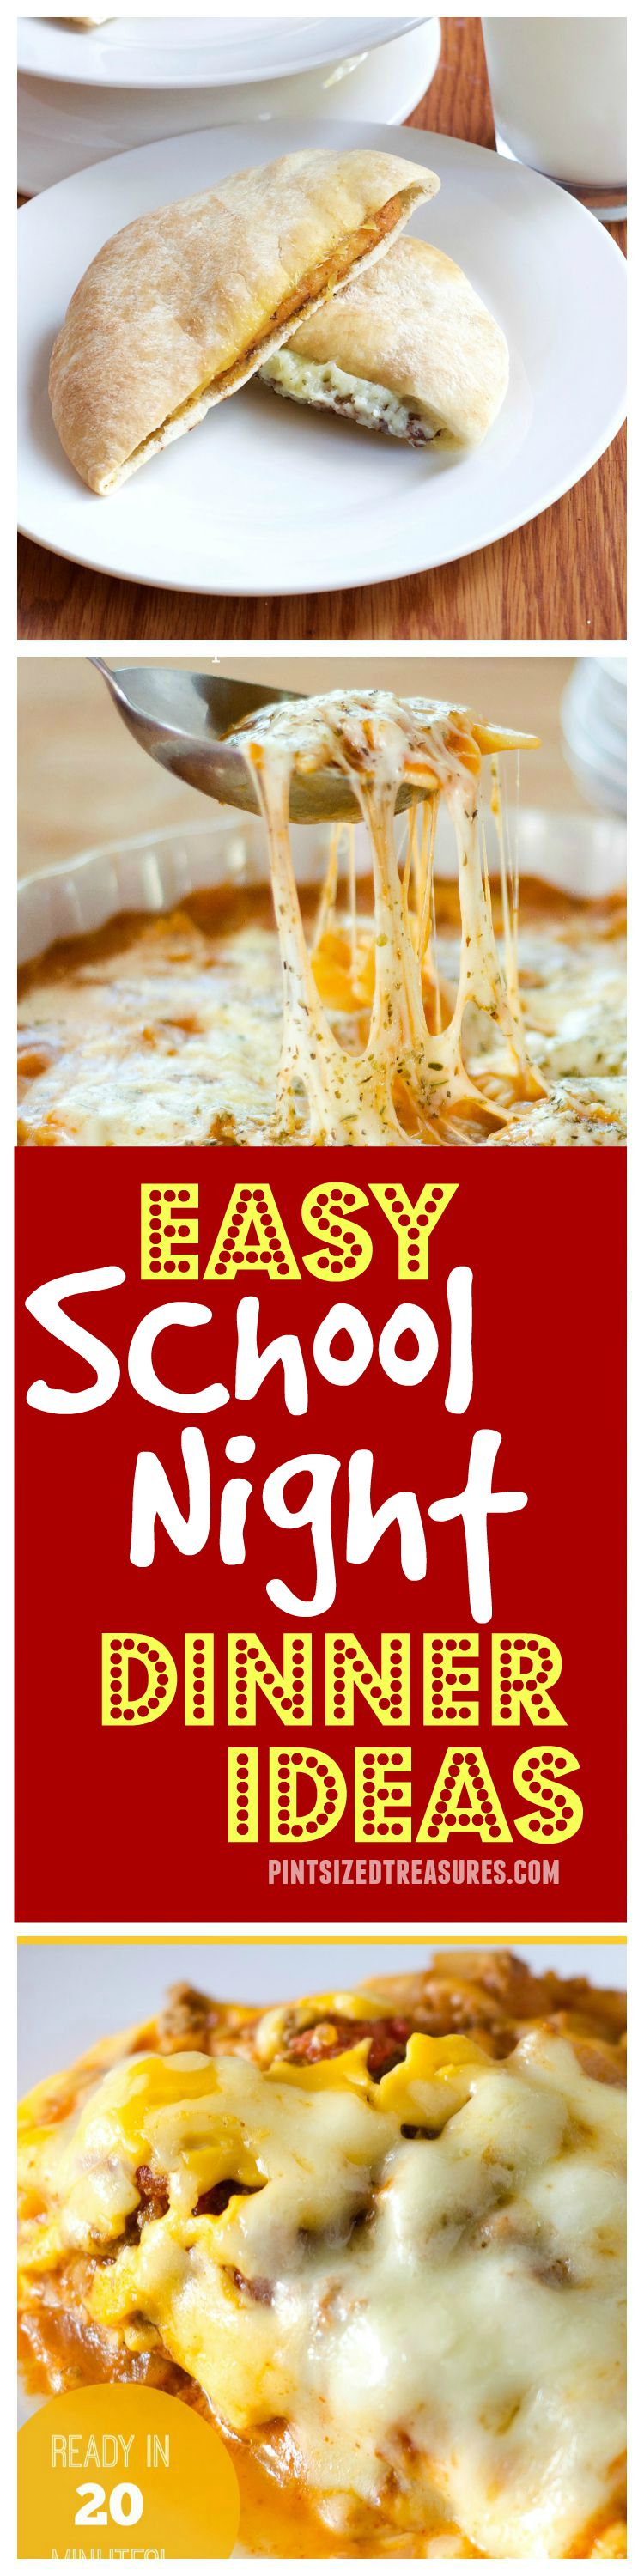 school night dinner ideas